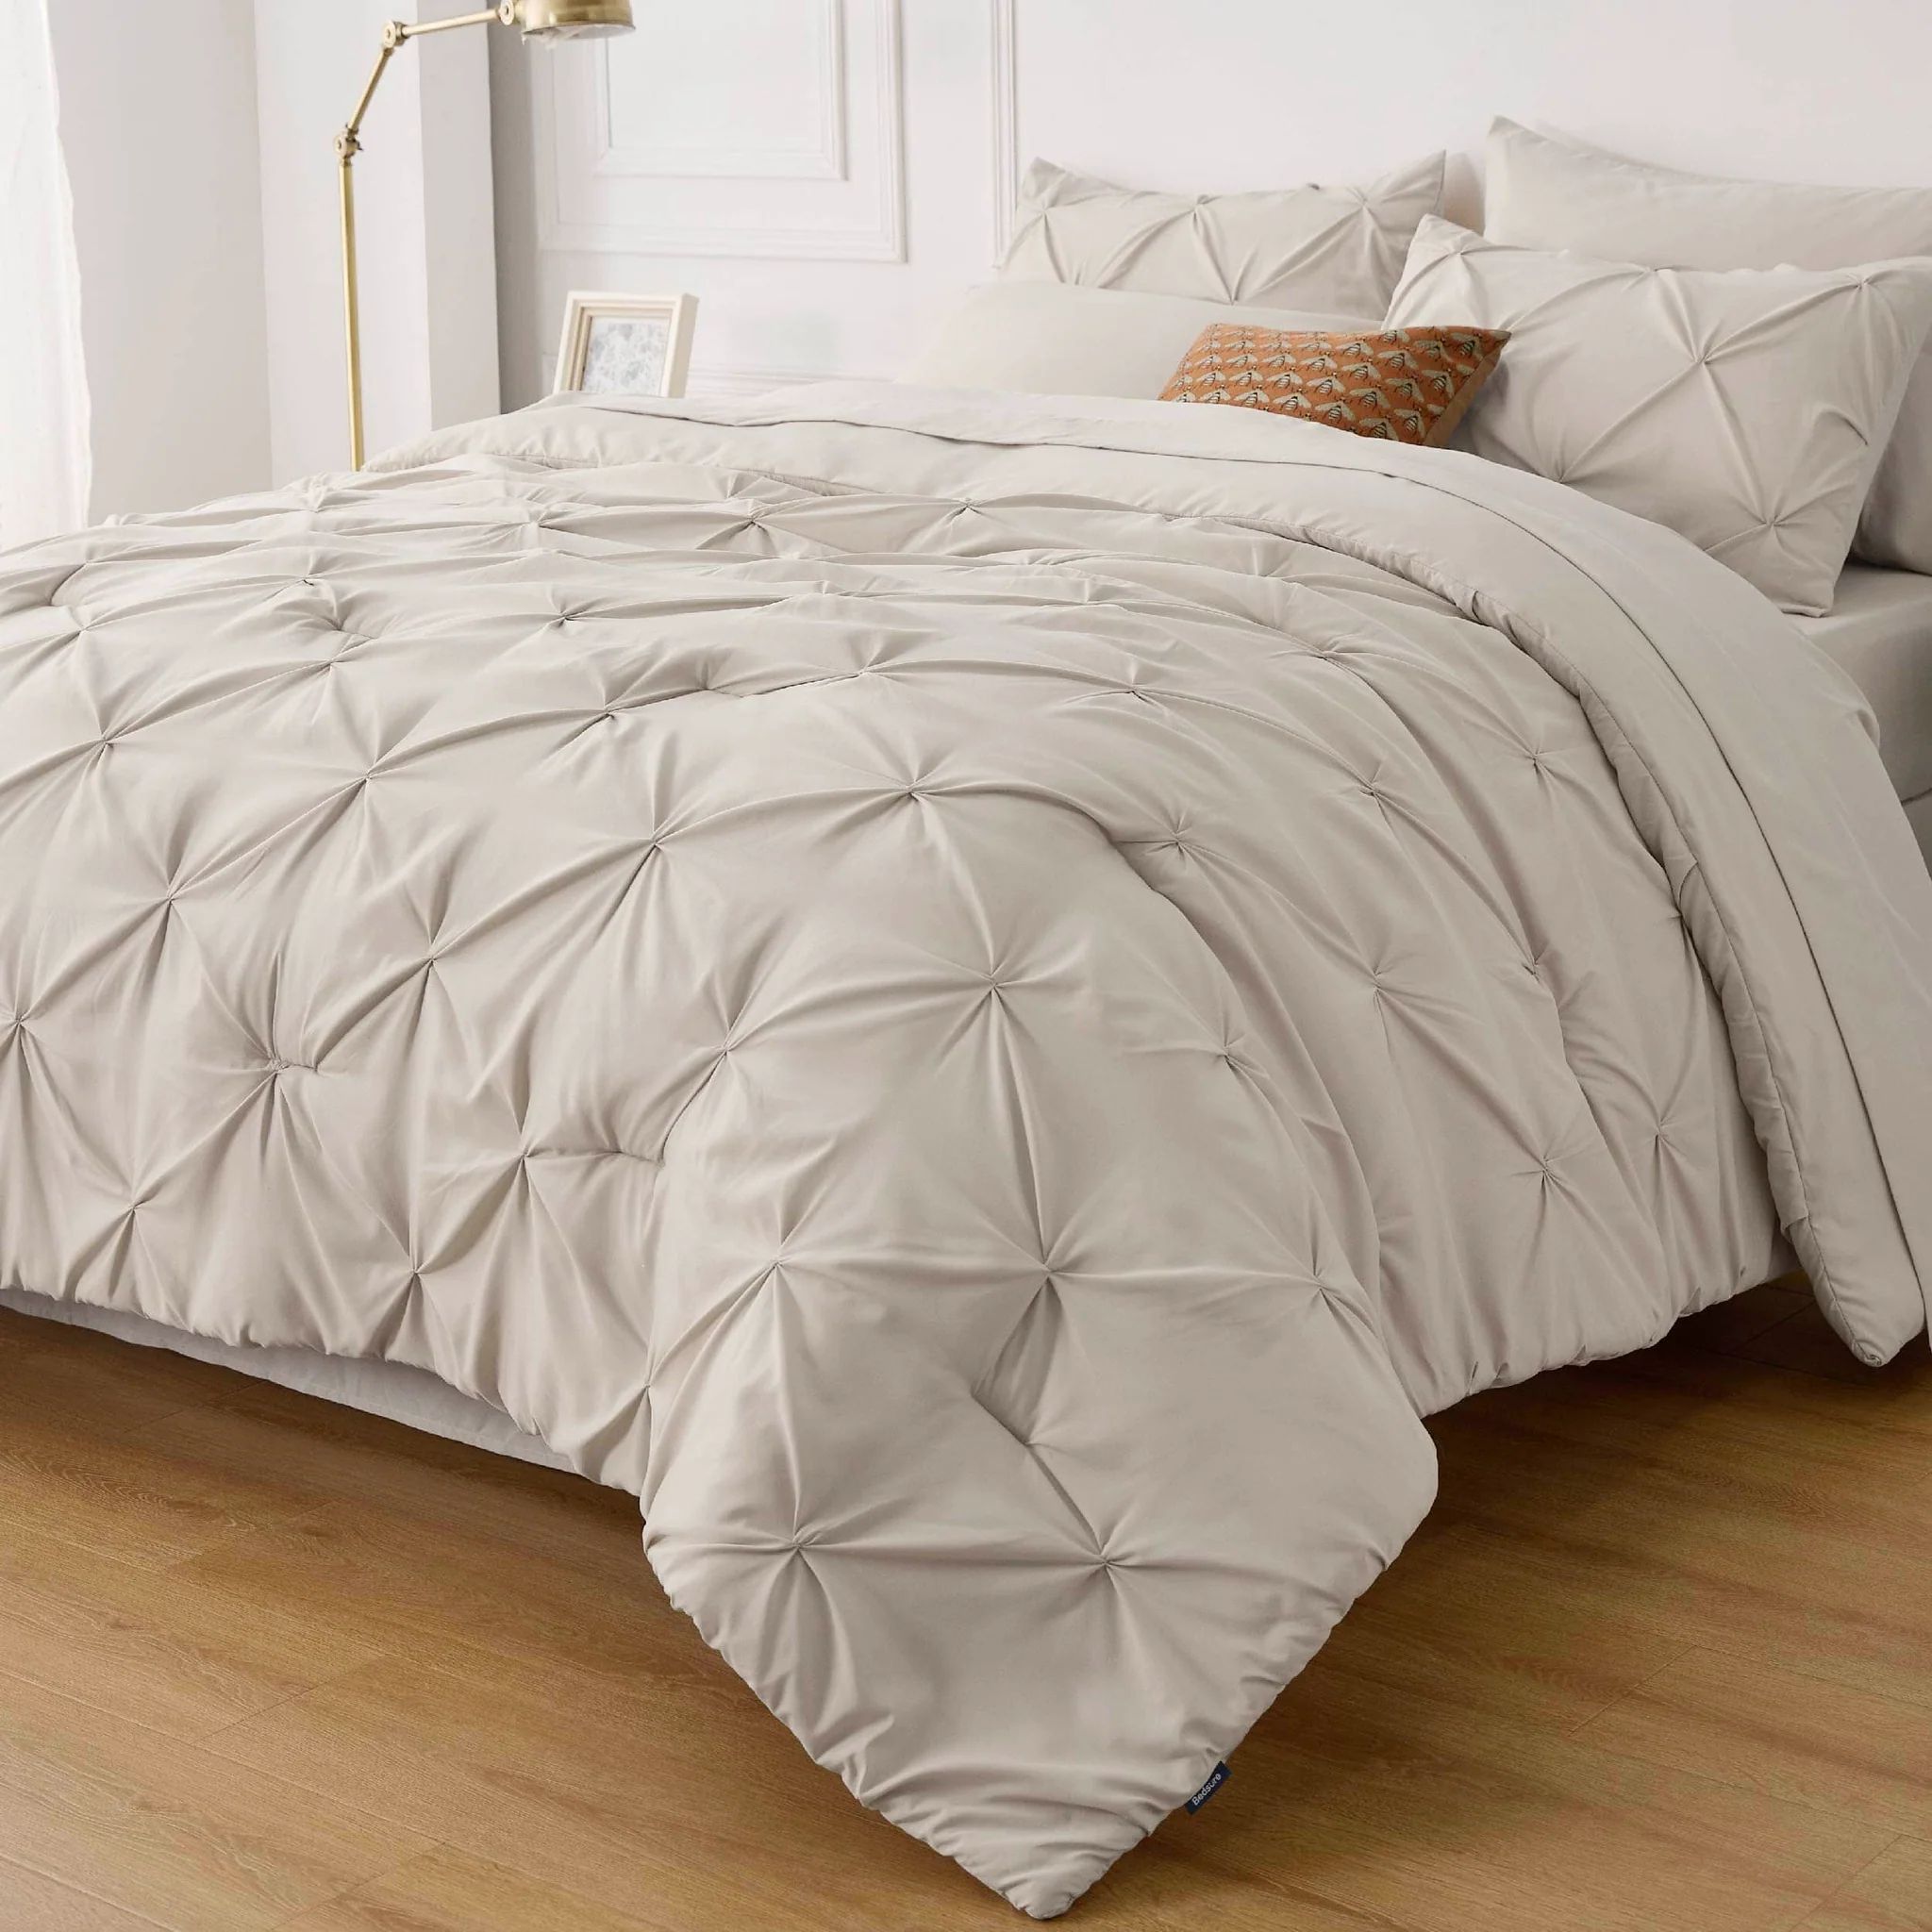 Spring Bedding Pintuck Comforter Sets | Bedsure